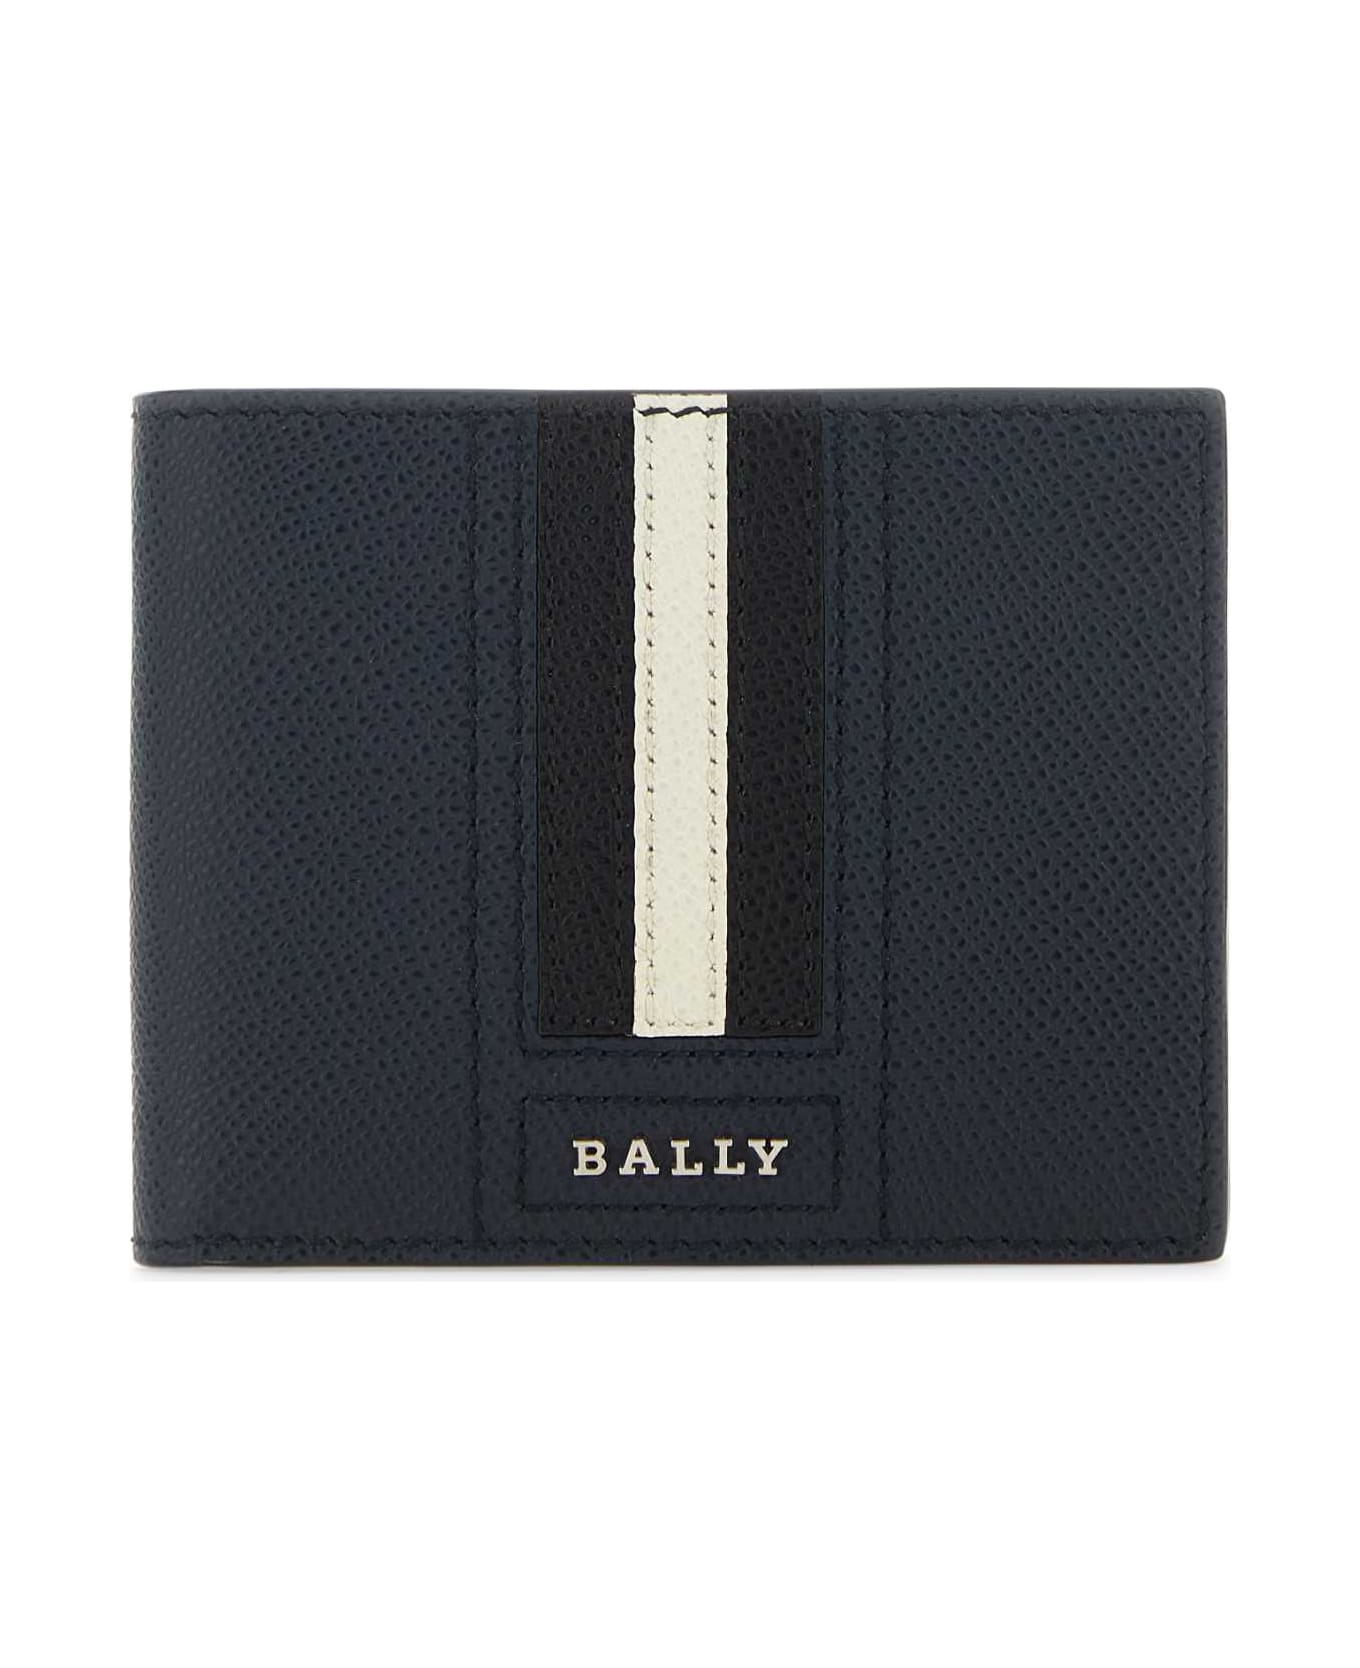 Bally Navy Blue Leather Wallet - NEWBLUE